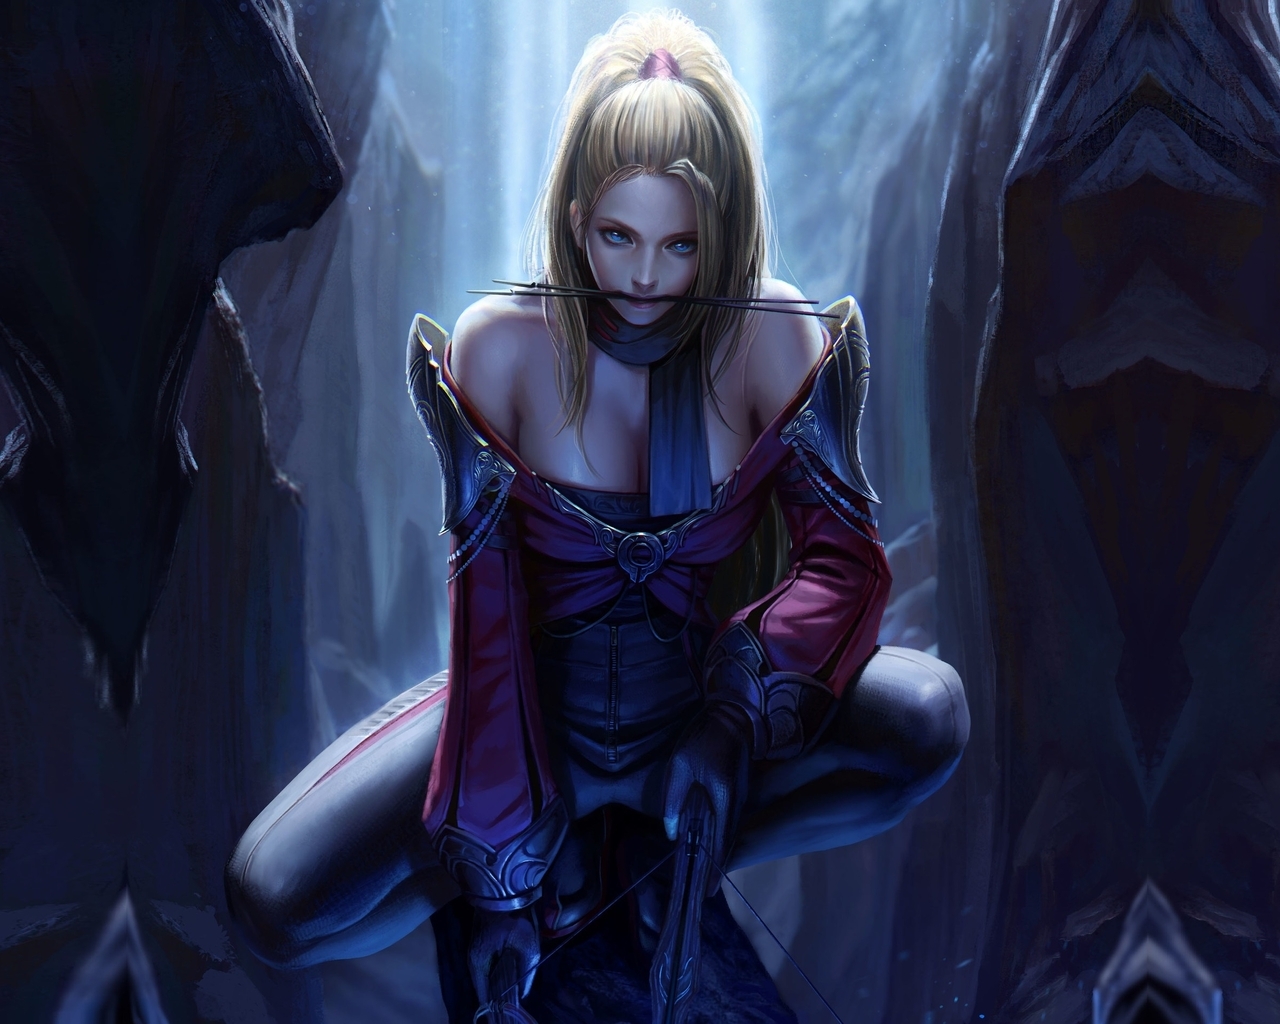 Image: Girl, warrior, cave, fantasy, assassin, fantasy